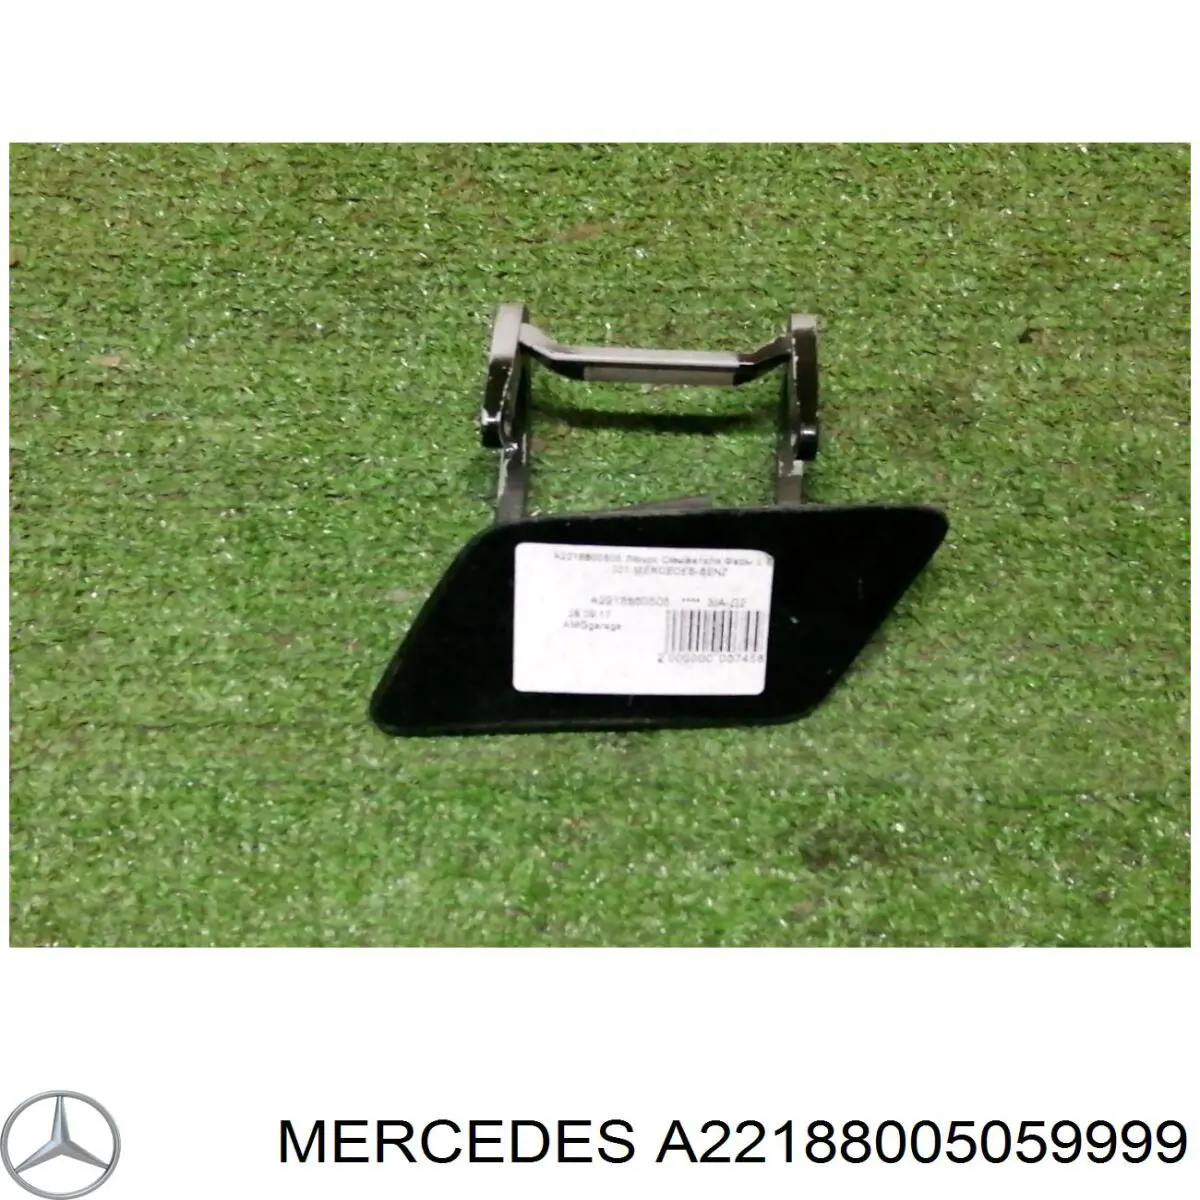 A22188005059999 Mercedes tapa de boquilla lavafaros